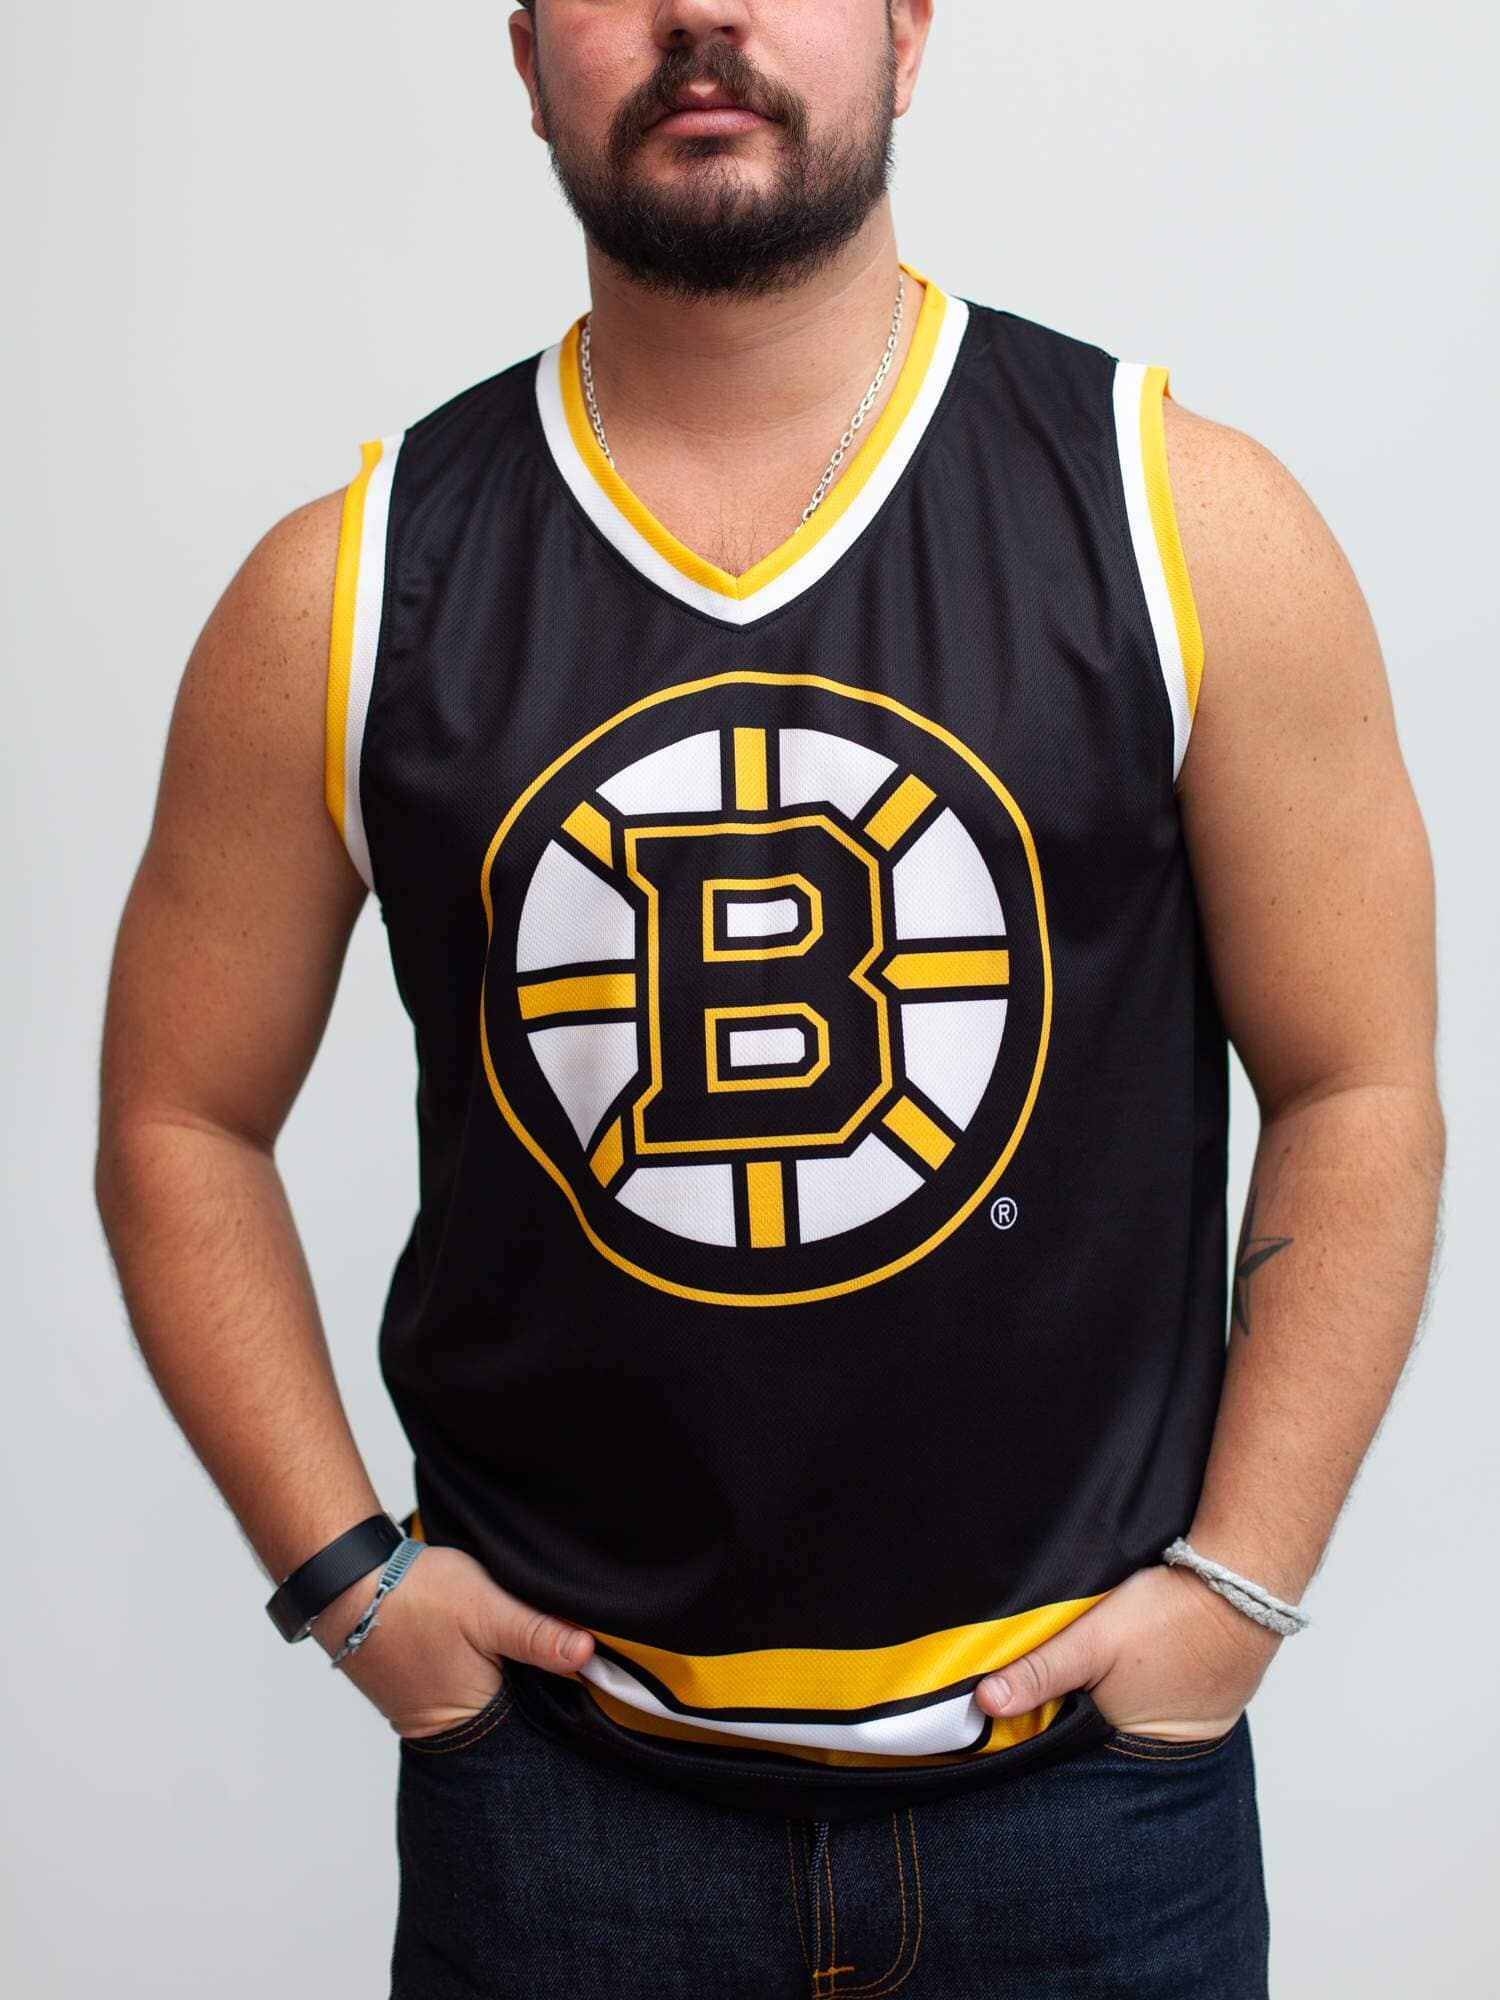 Bench Clearers Boston Bruins Full Fandom Moisture Wicking T-Shirt - M / Black / Polyester